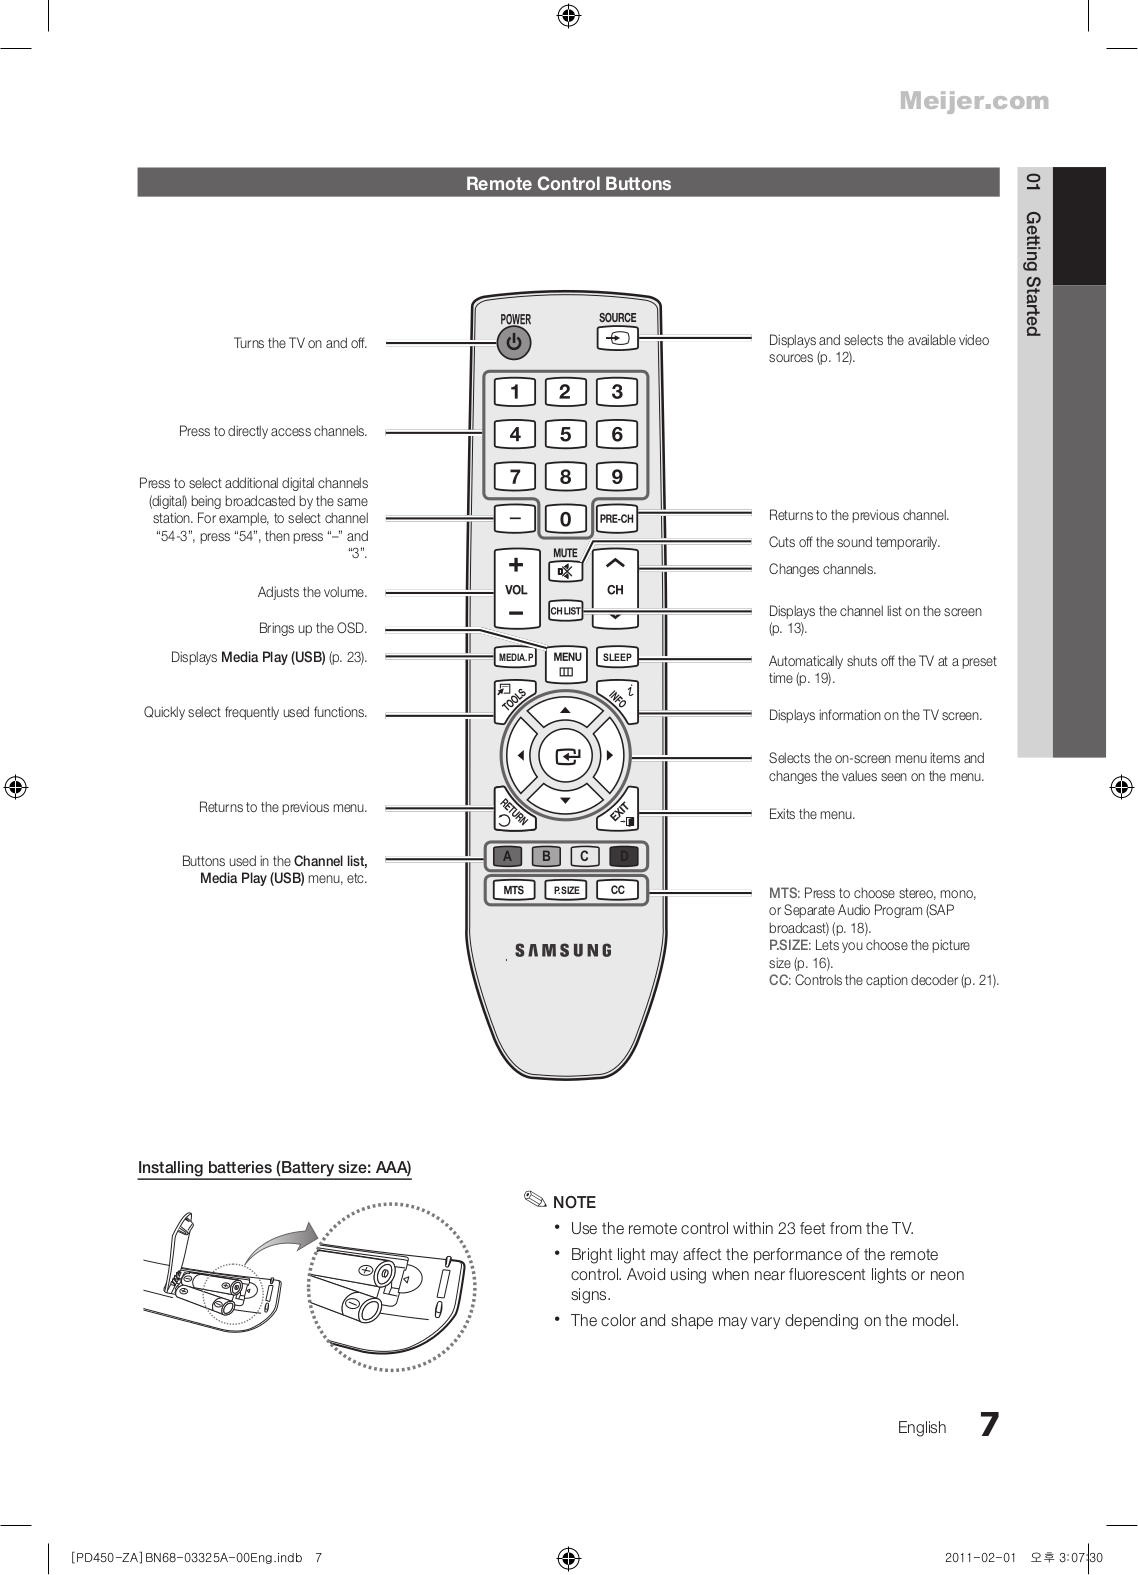 PDF manual for Samsung TV PN43D450